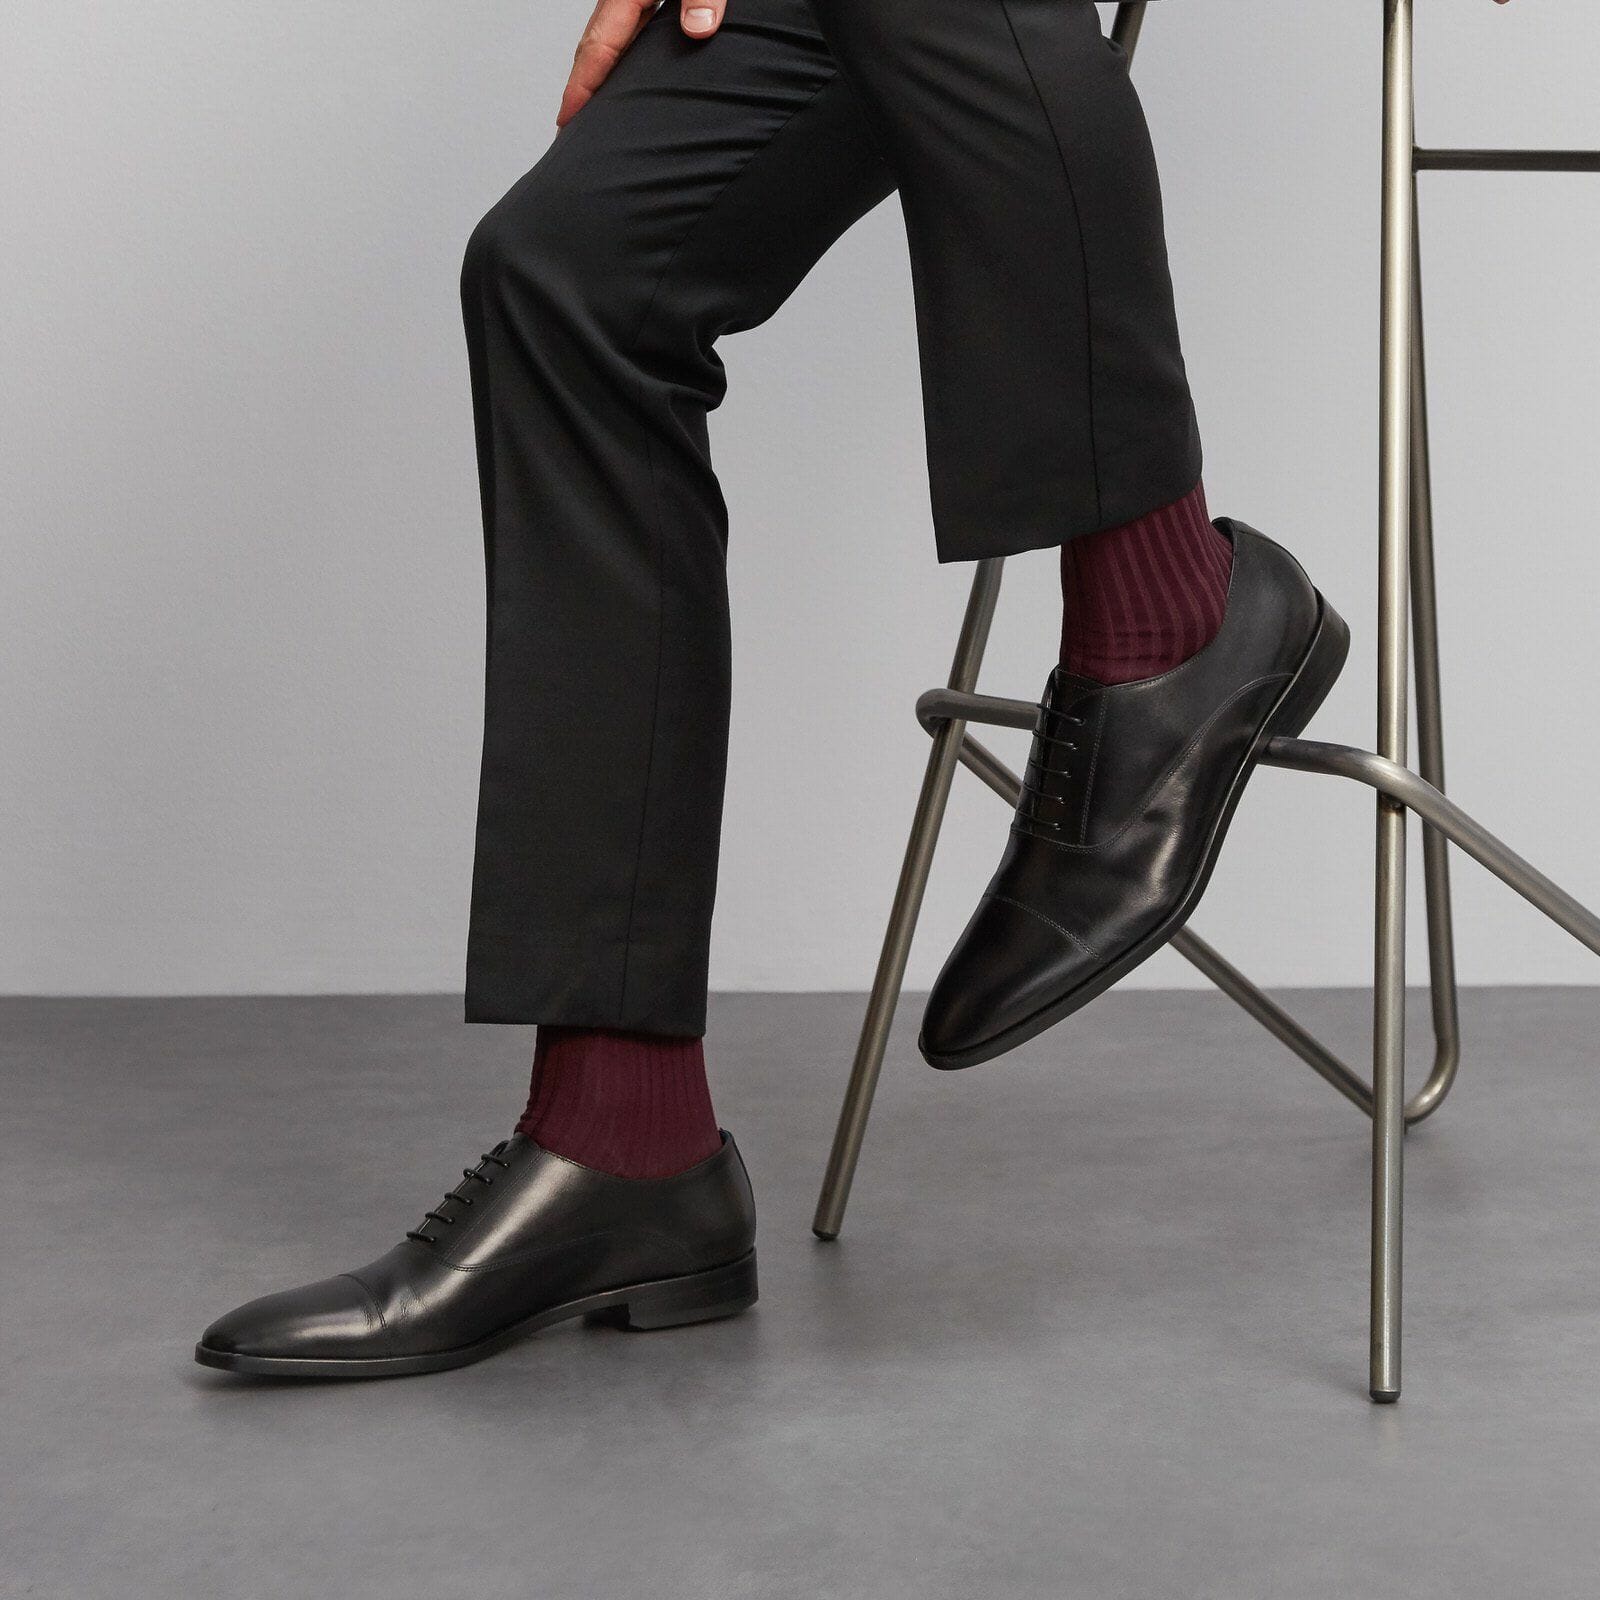 A man sitting down wearing burgundy socks